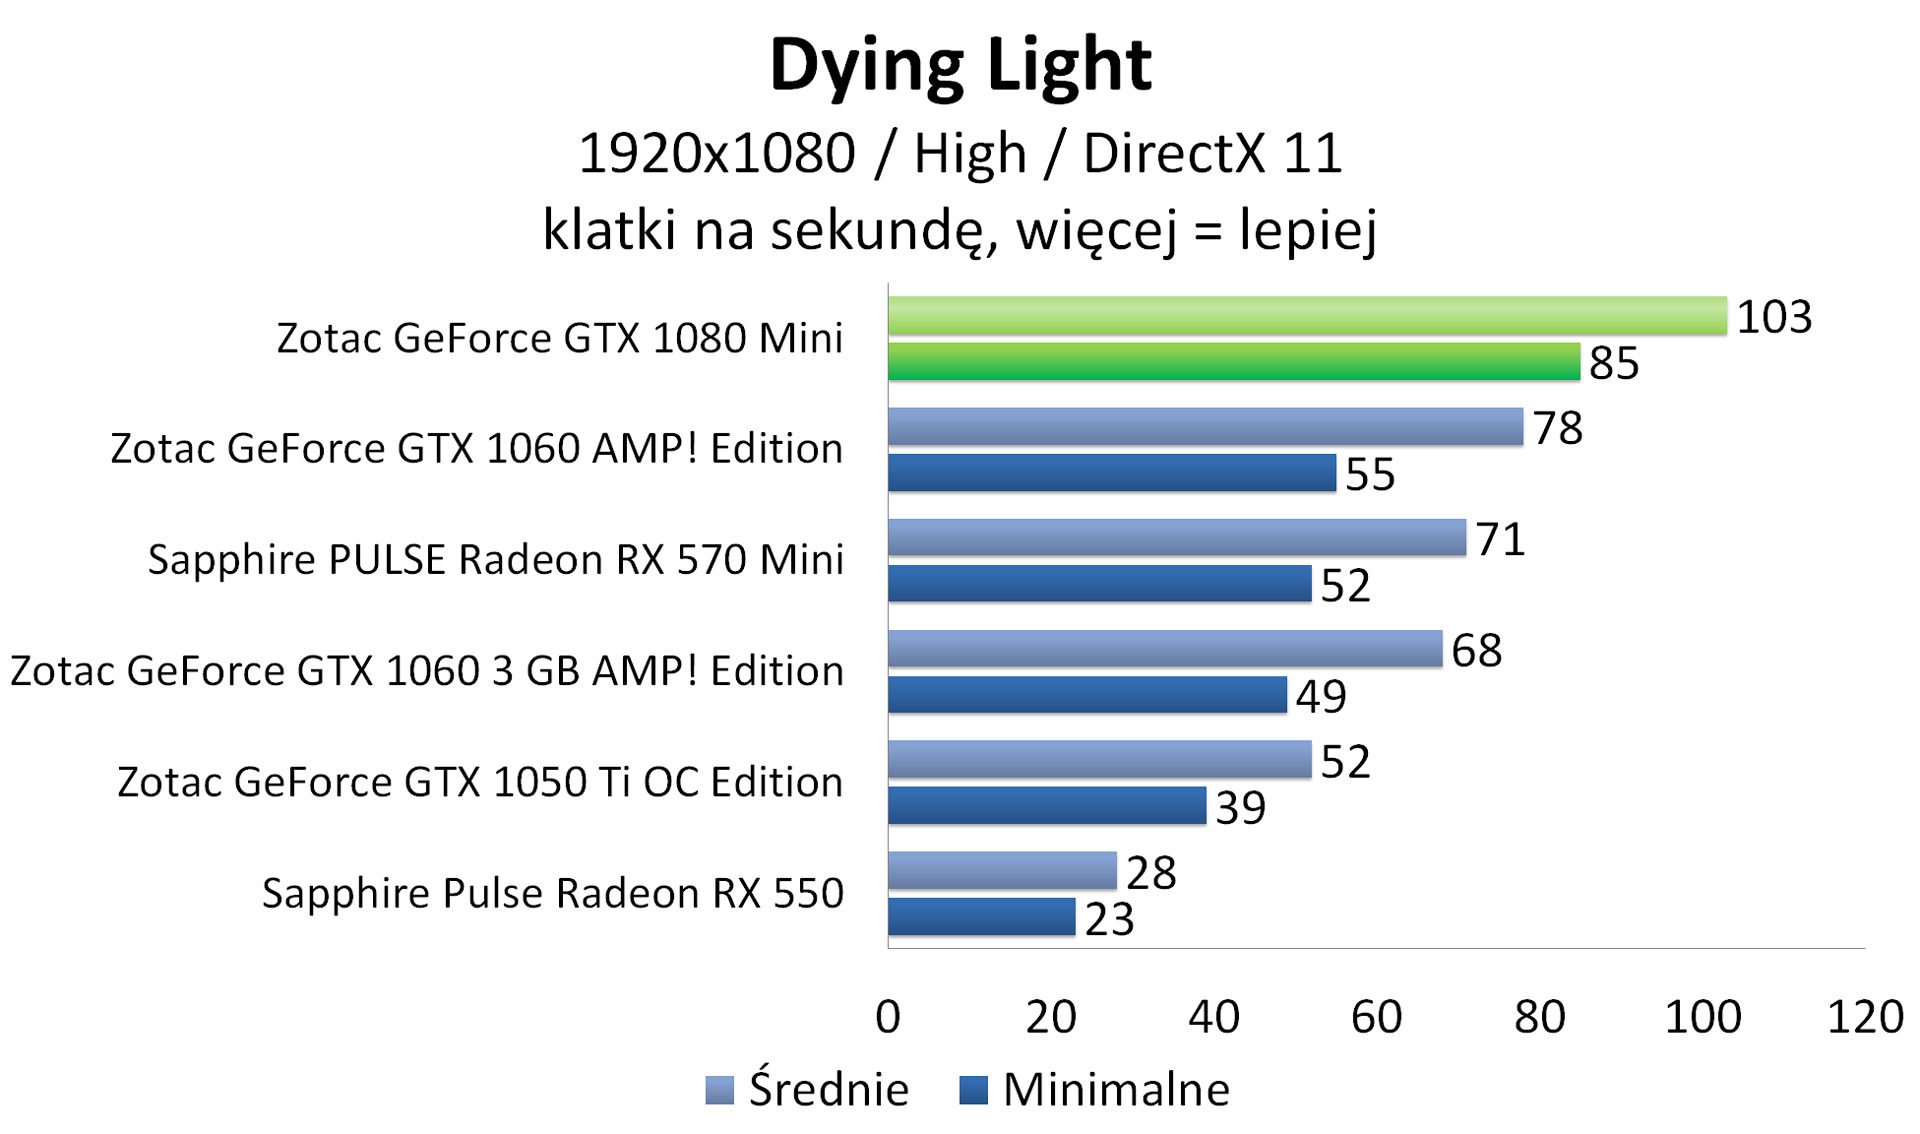 Zotac GeForce GTX 1080 Mini - Dying Light